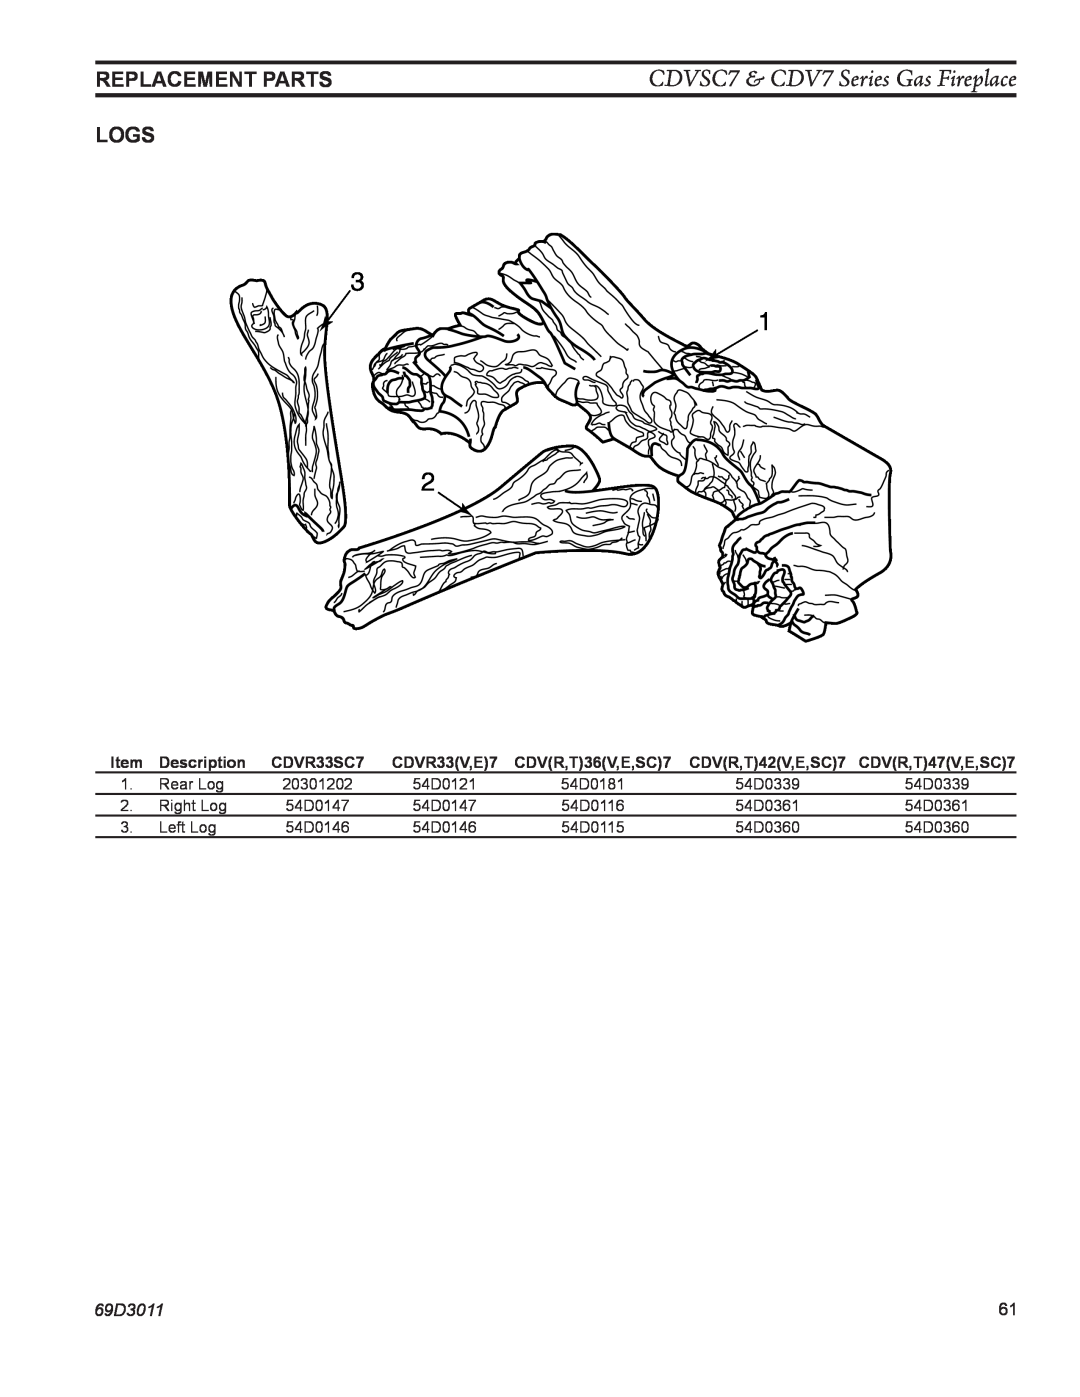 Monessen Hearth manual logs, CDVSC7 & CDV7 Series Gas Fireplace, Replacement Parts, 69D3011 